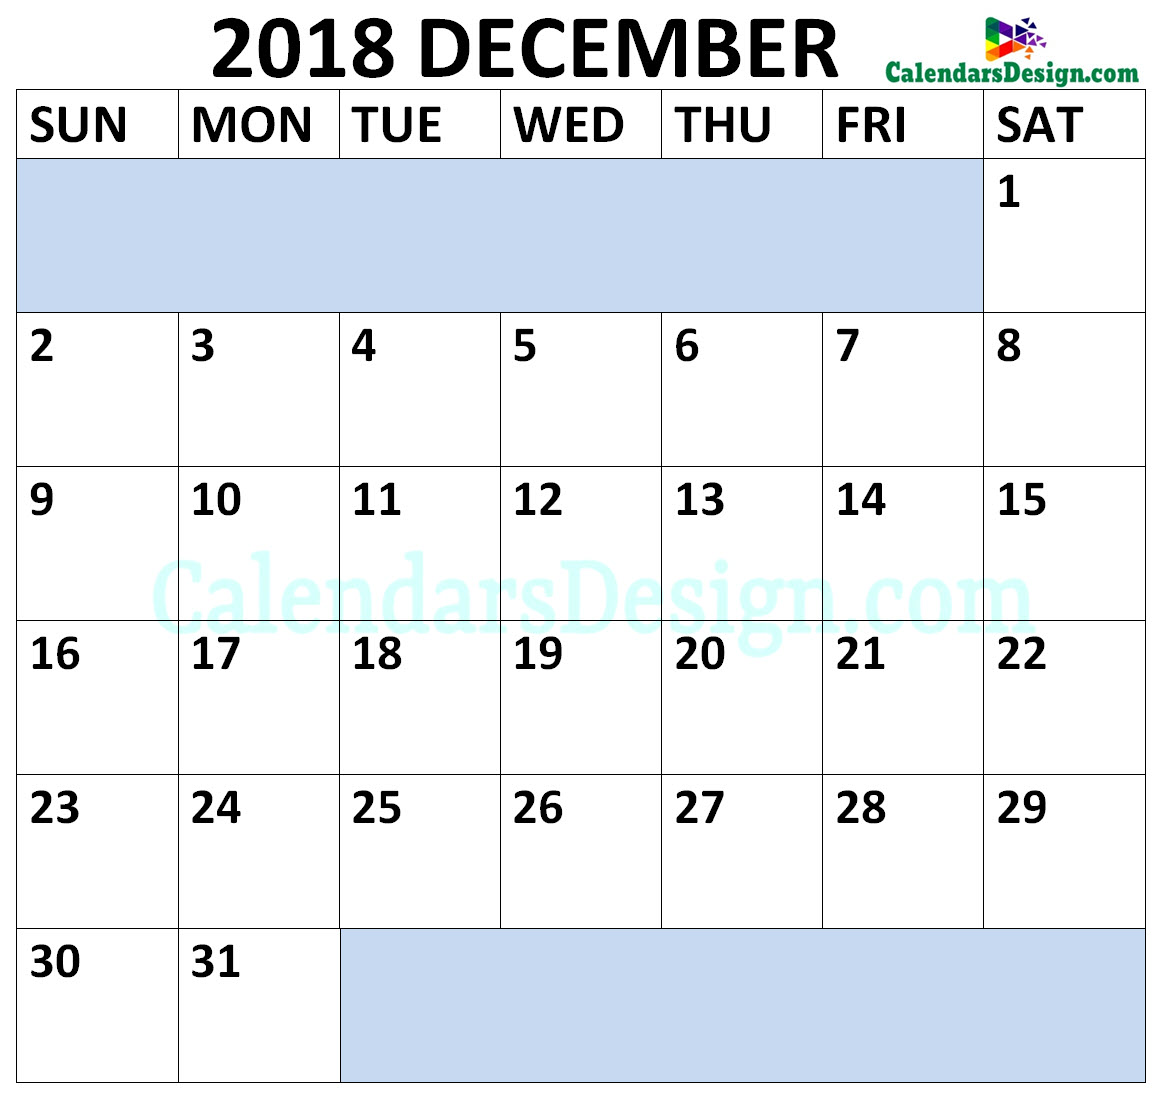 December 2018 Calendar Landscape